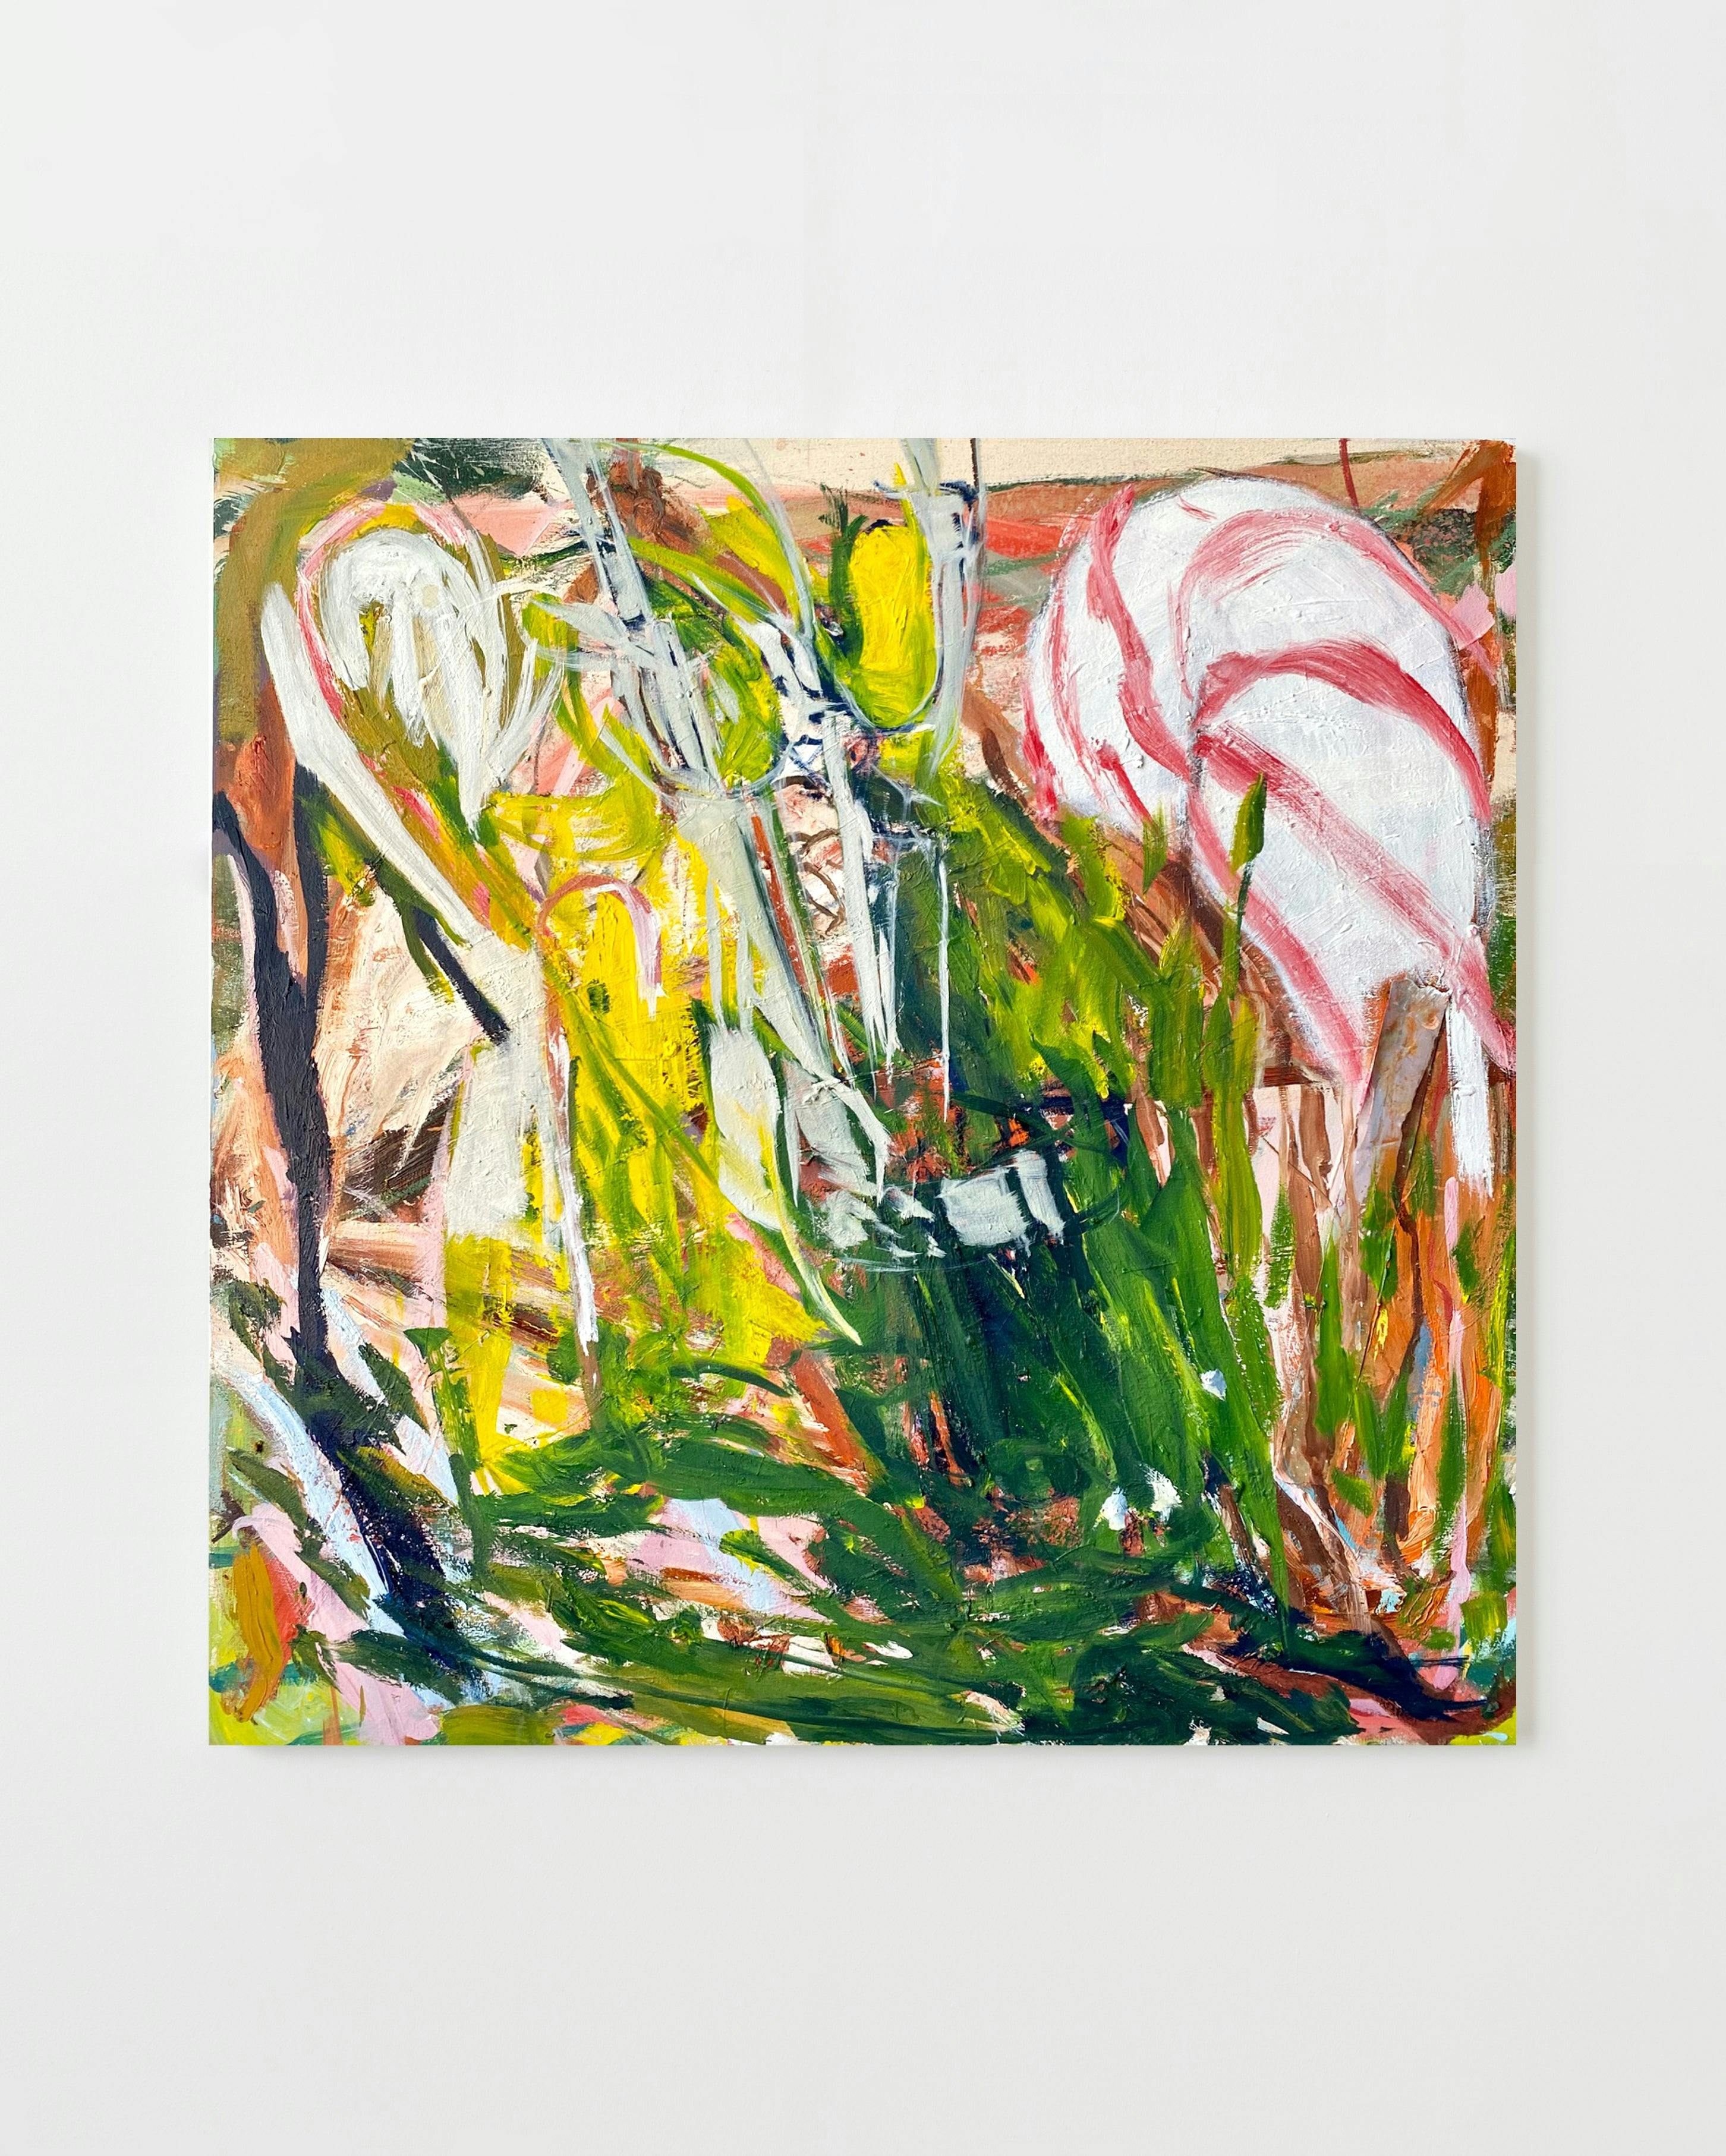 Diana Delgado - Candy Cane, Candelabra, Grass - Painting